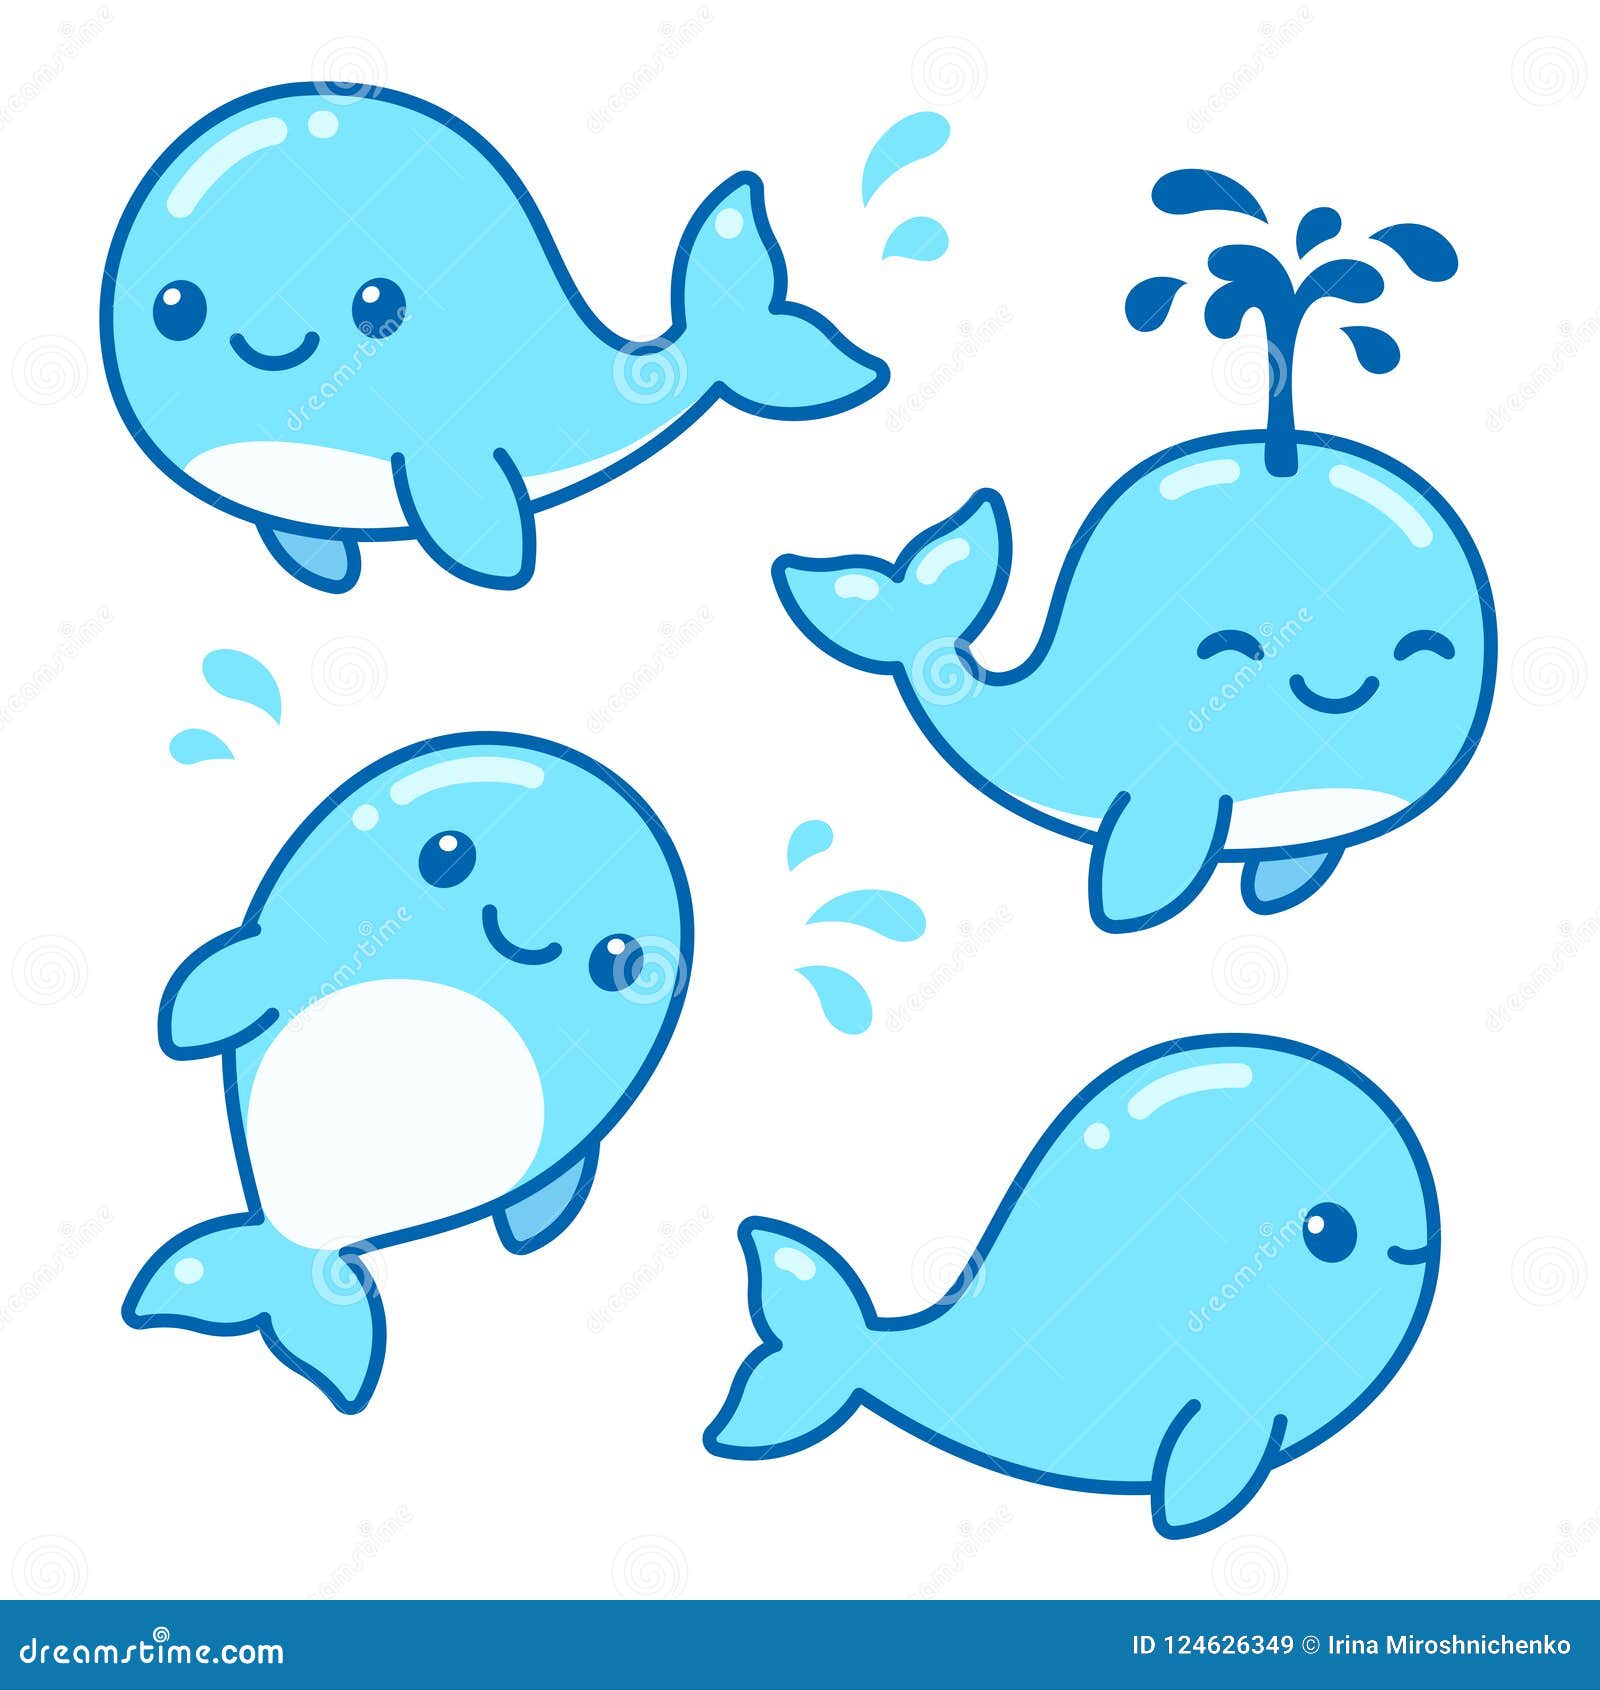 Cute cartoon whale set stock vector. Illustration of drop - 124626349